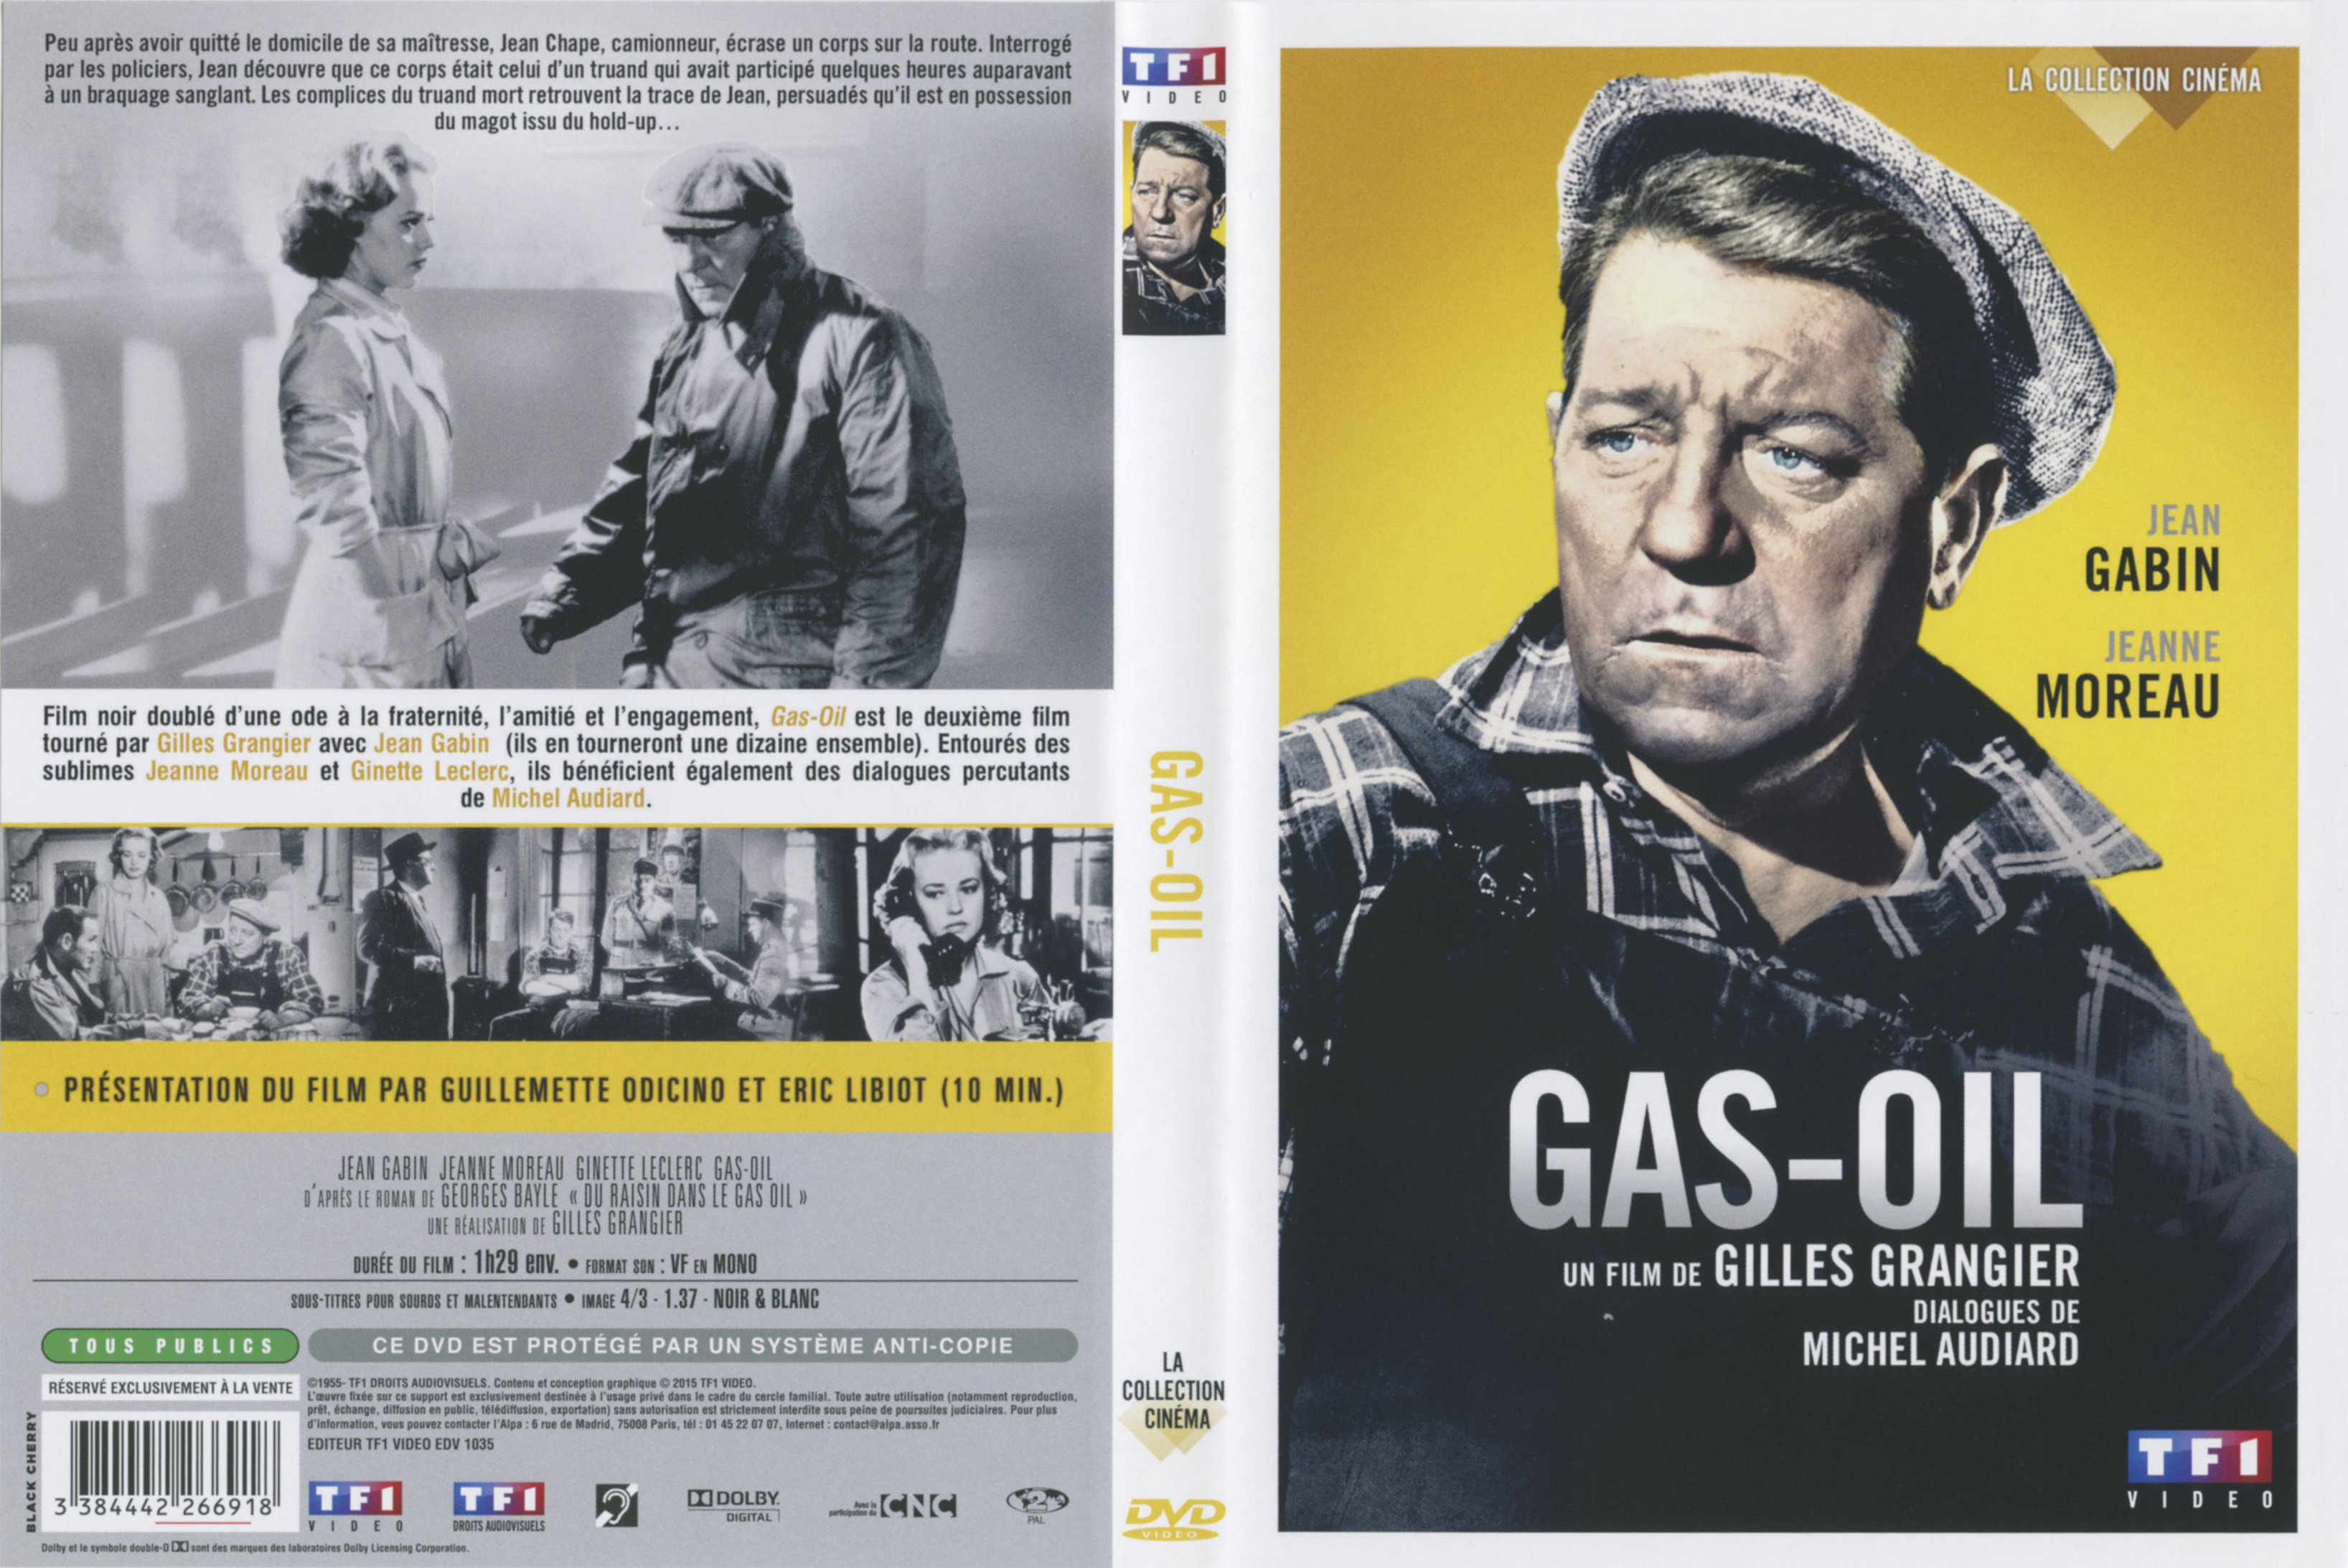 Jaquette DVD Gas-oil v2